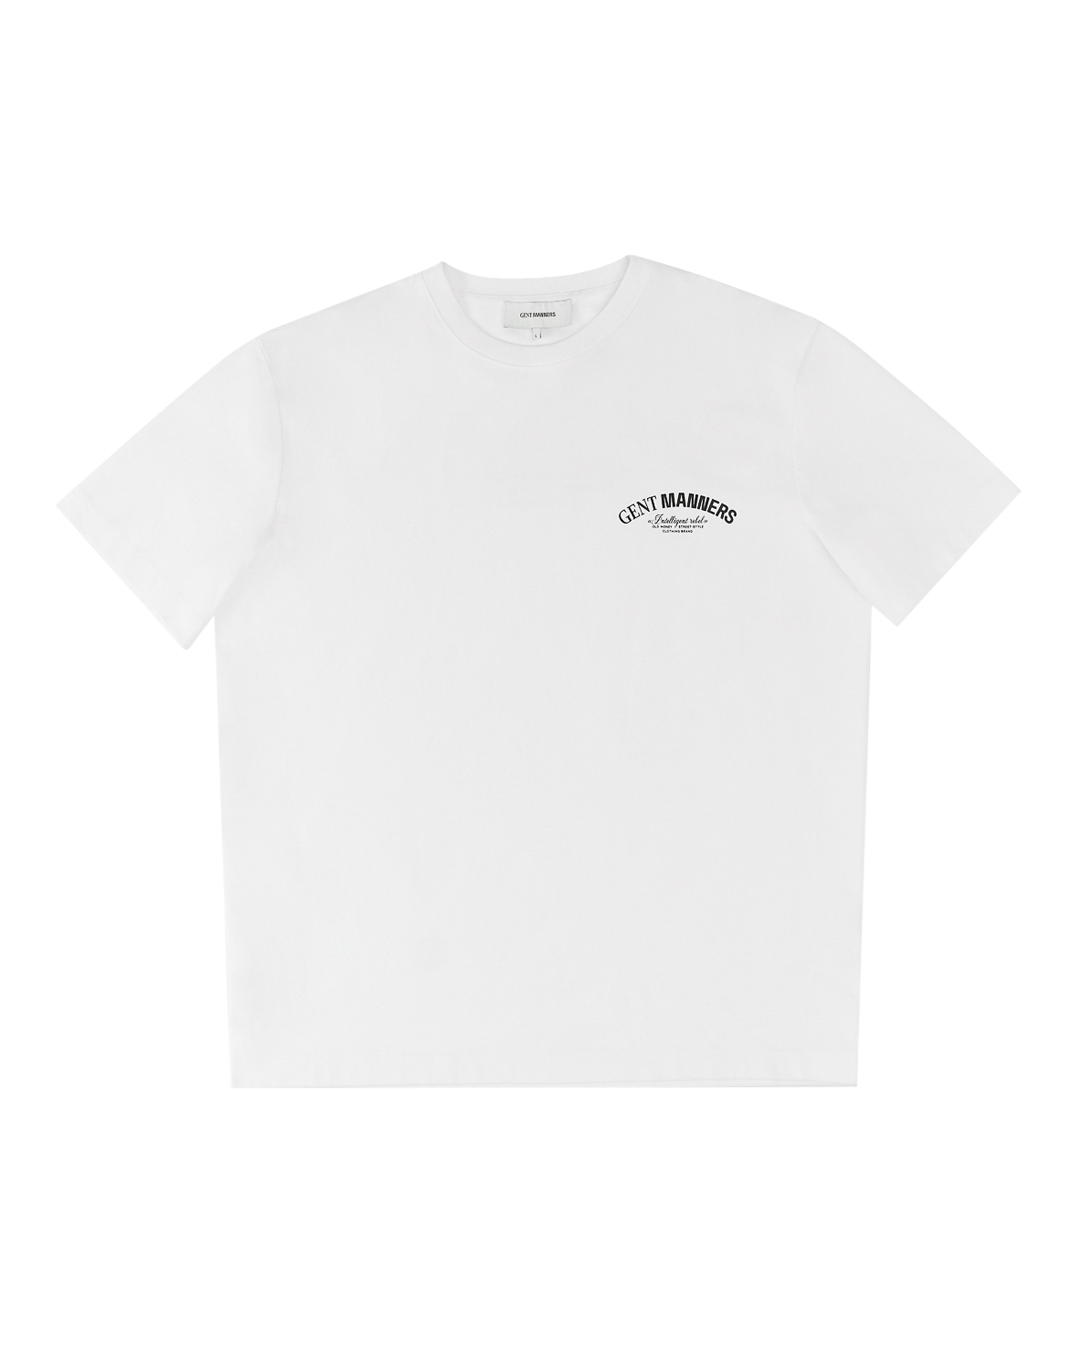 футболка Gent Manners 01_08T_WH белый 2xl, размер 2xl